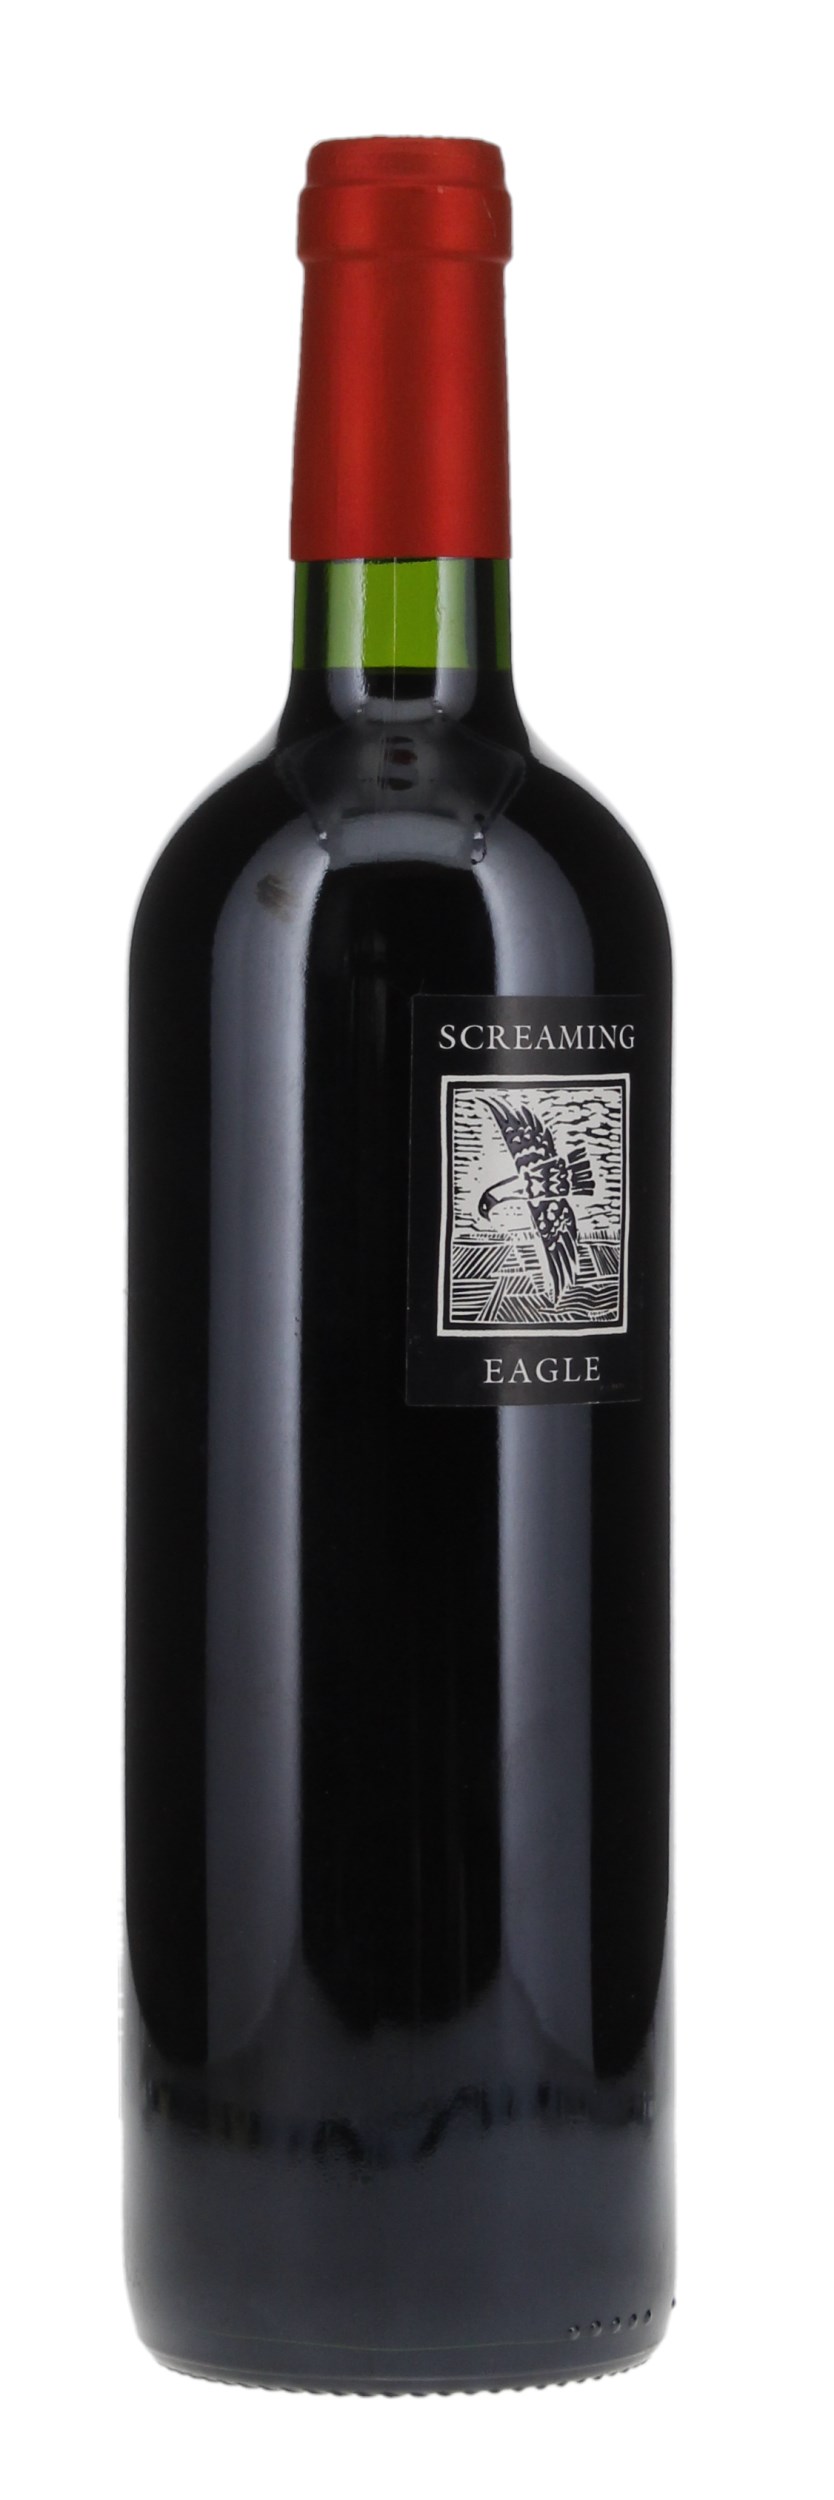 2008 Screaming Eagle Cabernet Sauvignon, 750ml